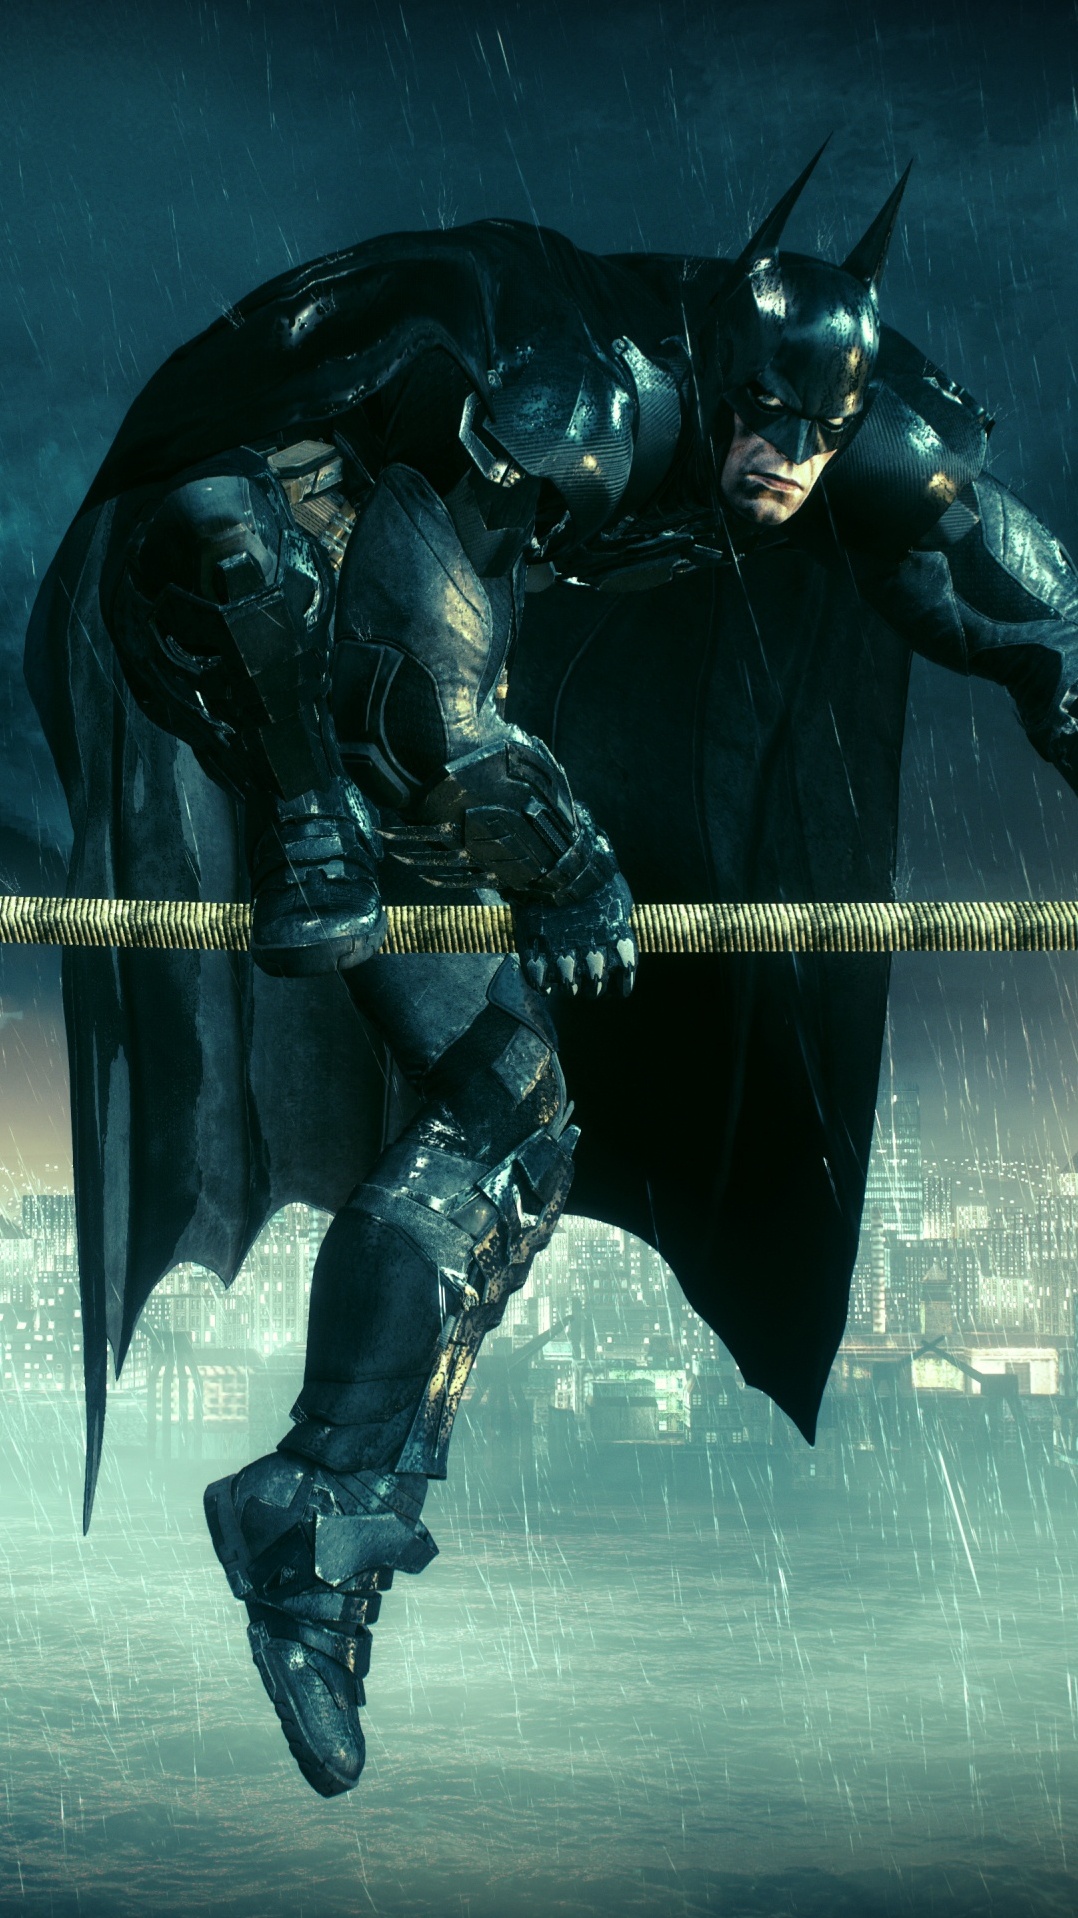 бэтмен рыцарь аркхема, женщина кошка, компьютерная игра, цифровой композитинг, бэтмен